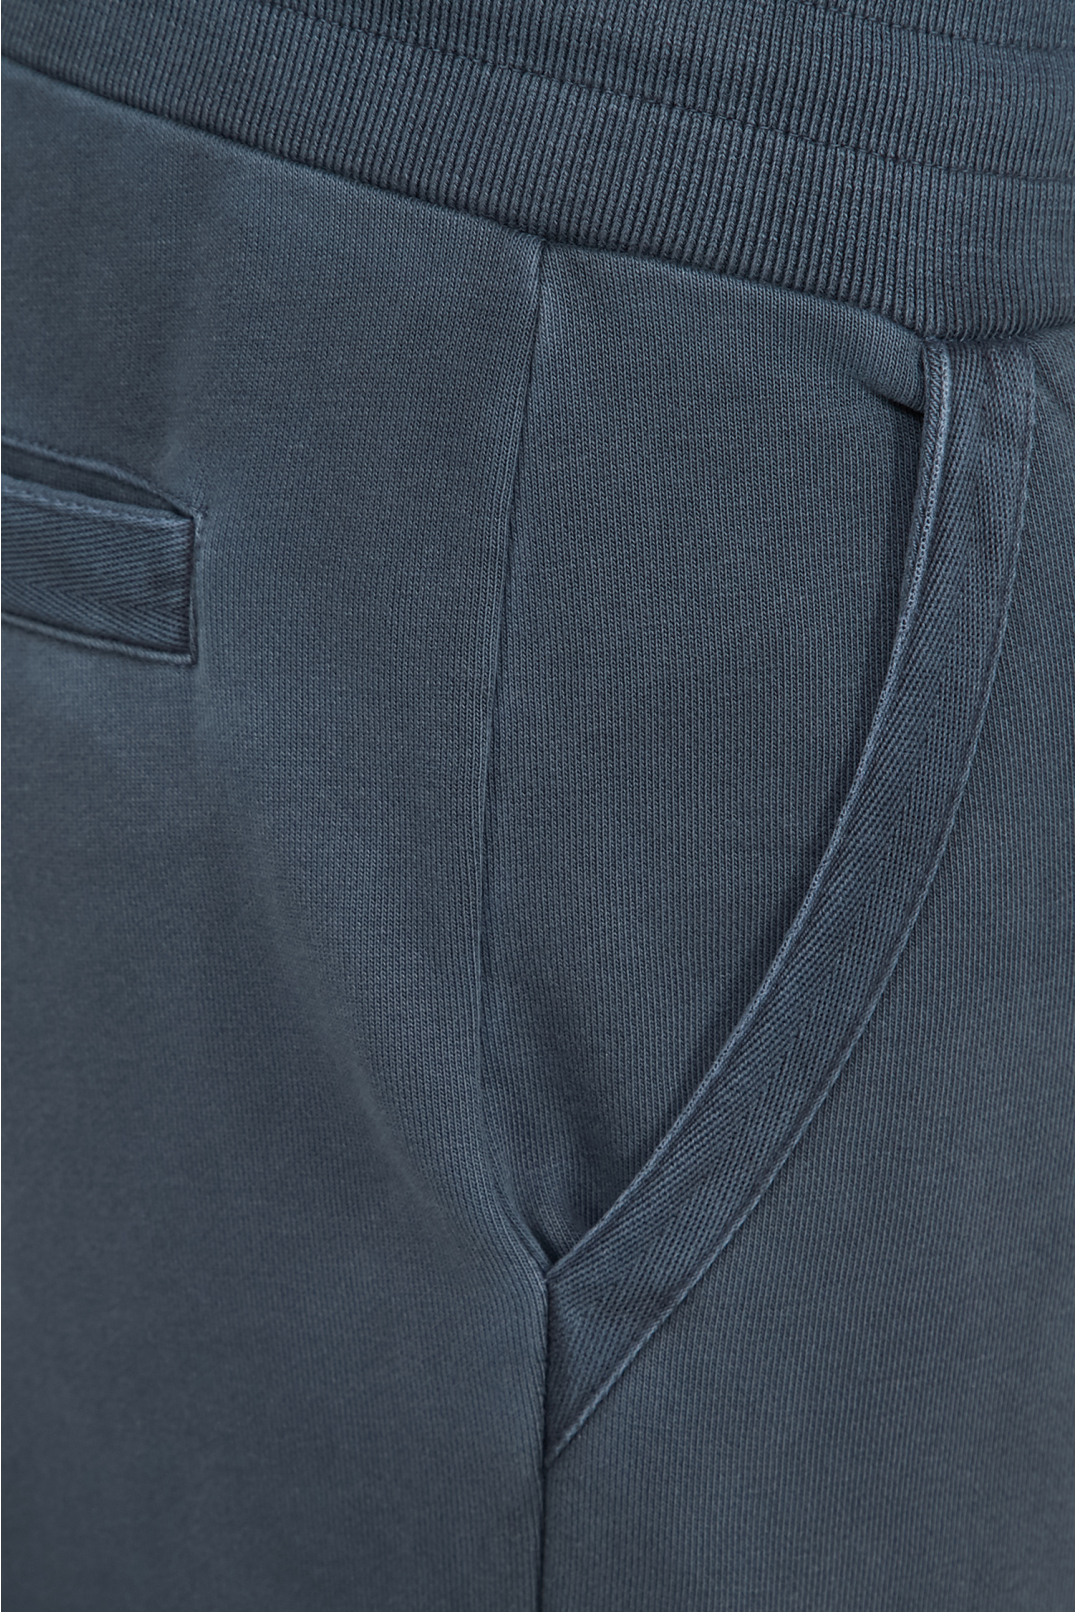 Мужской синий спортивный костюм (кофта, брюки) - 3